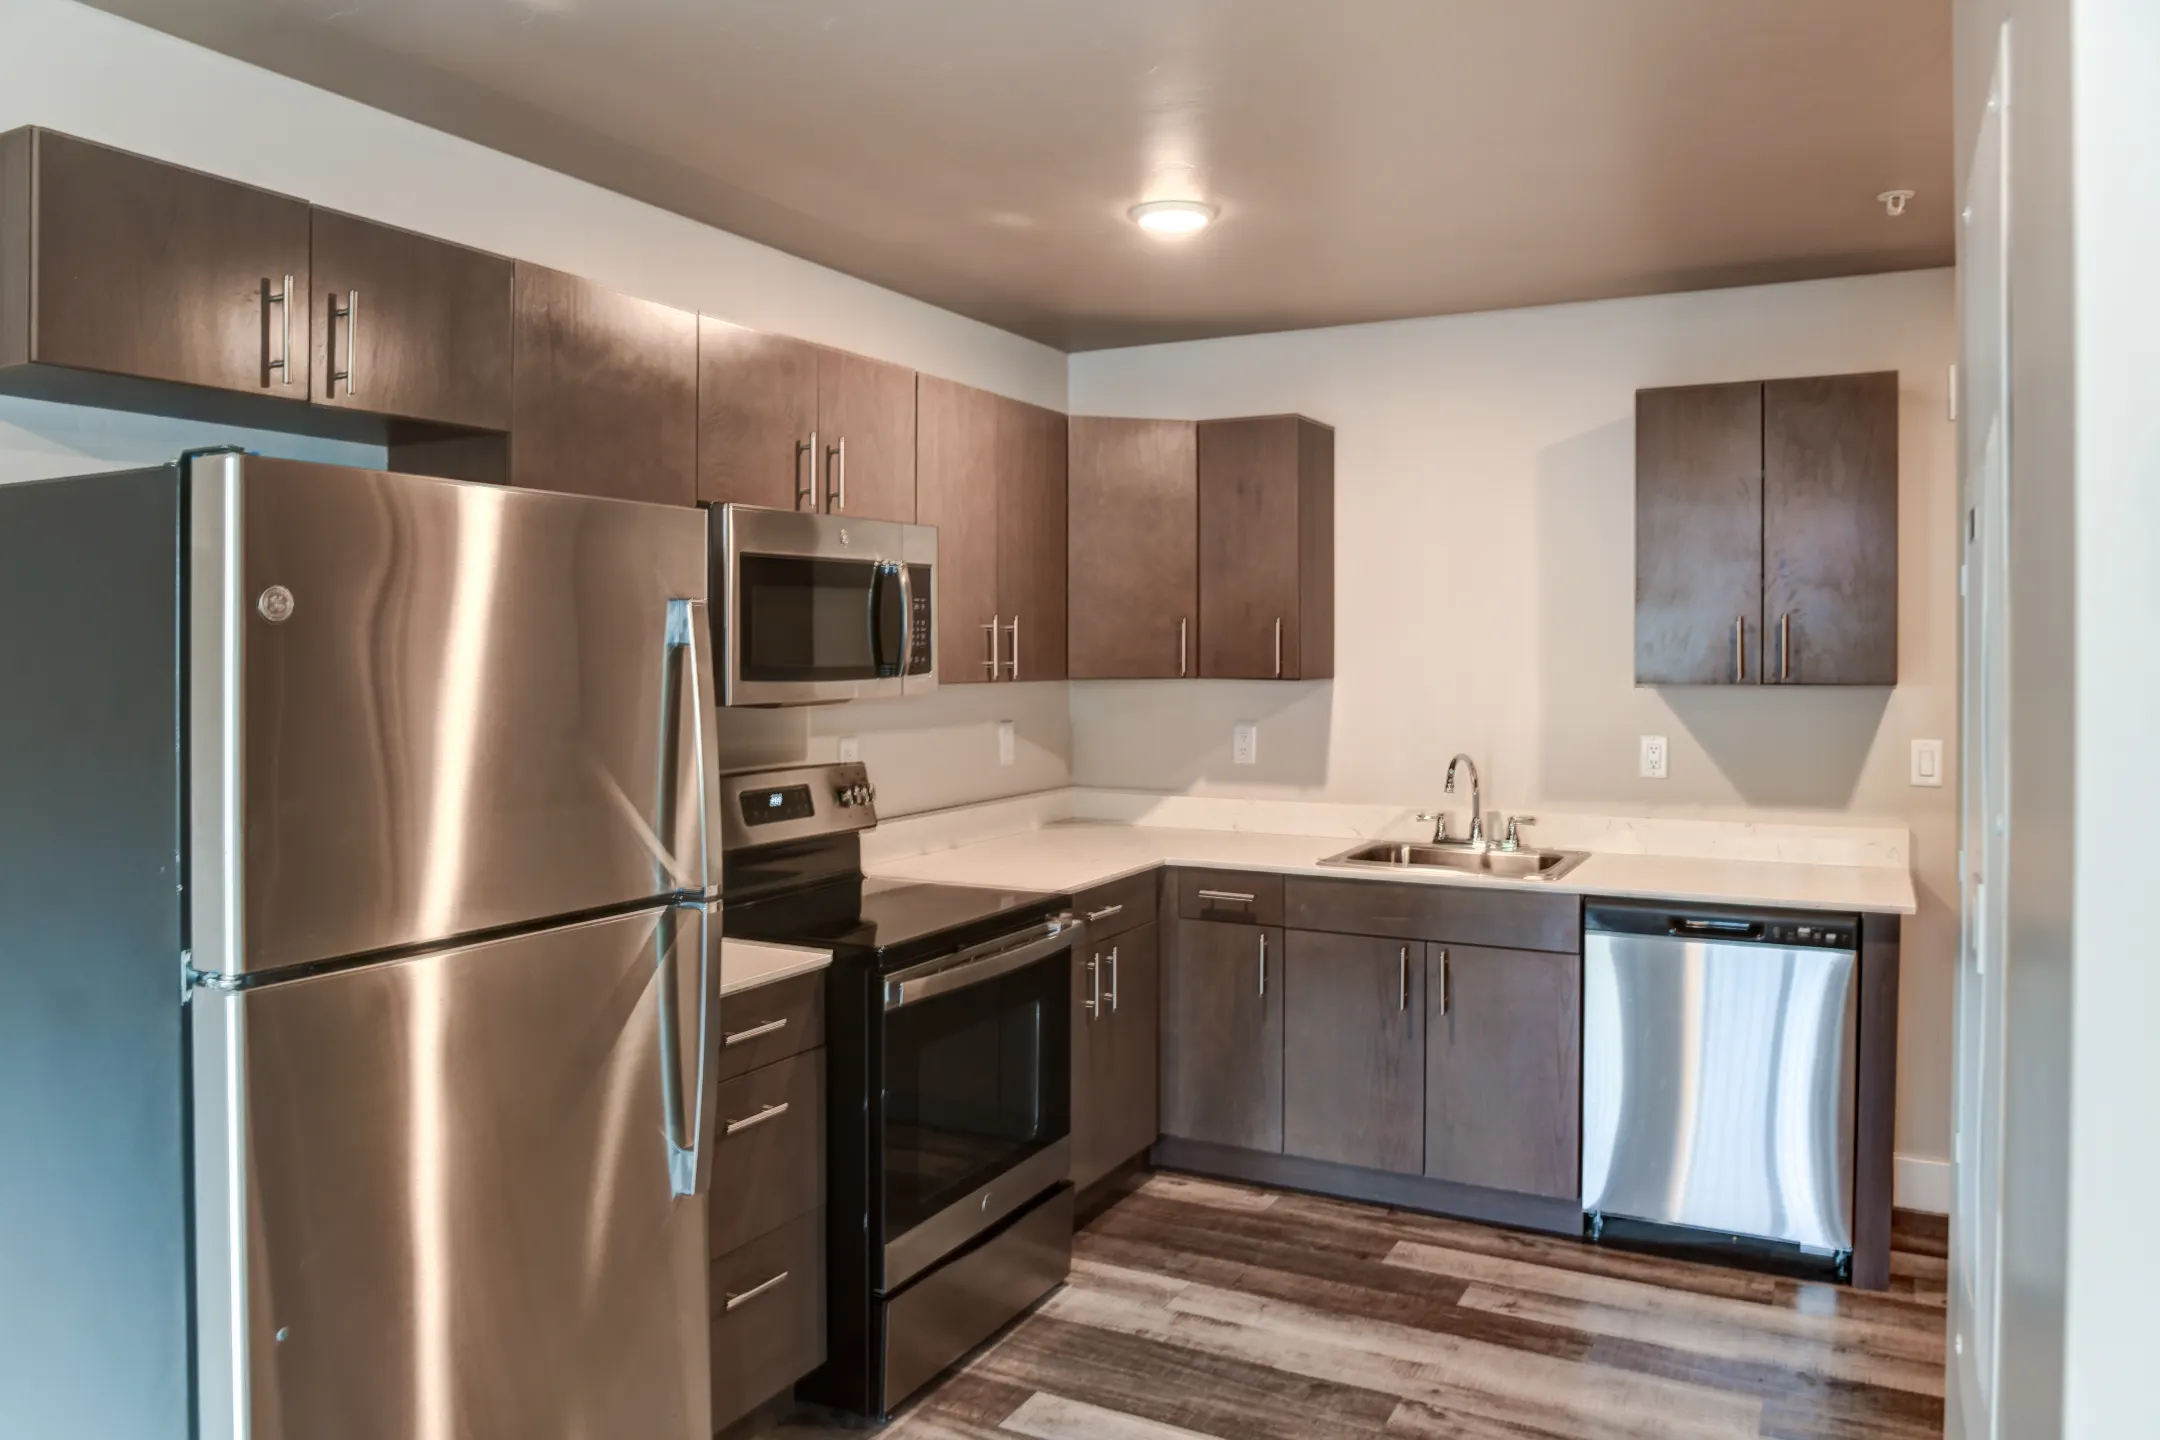 Kitchen - Whitefish Apartment Homes - Whitefish, MT